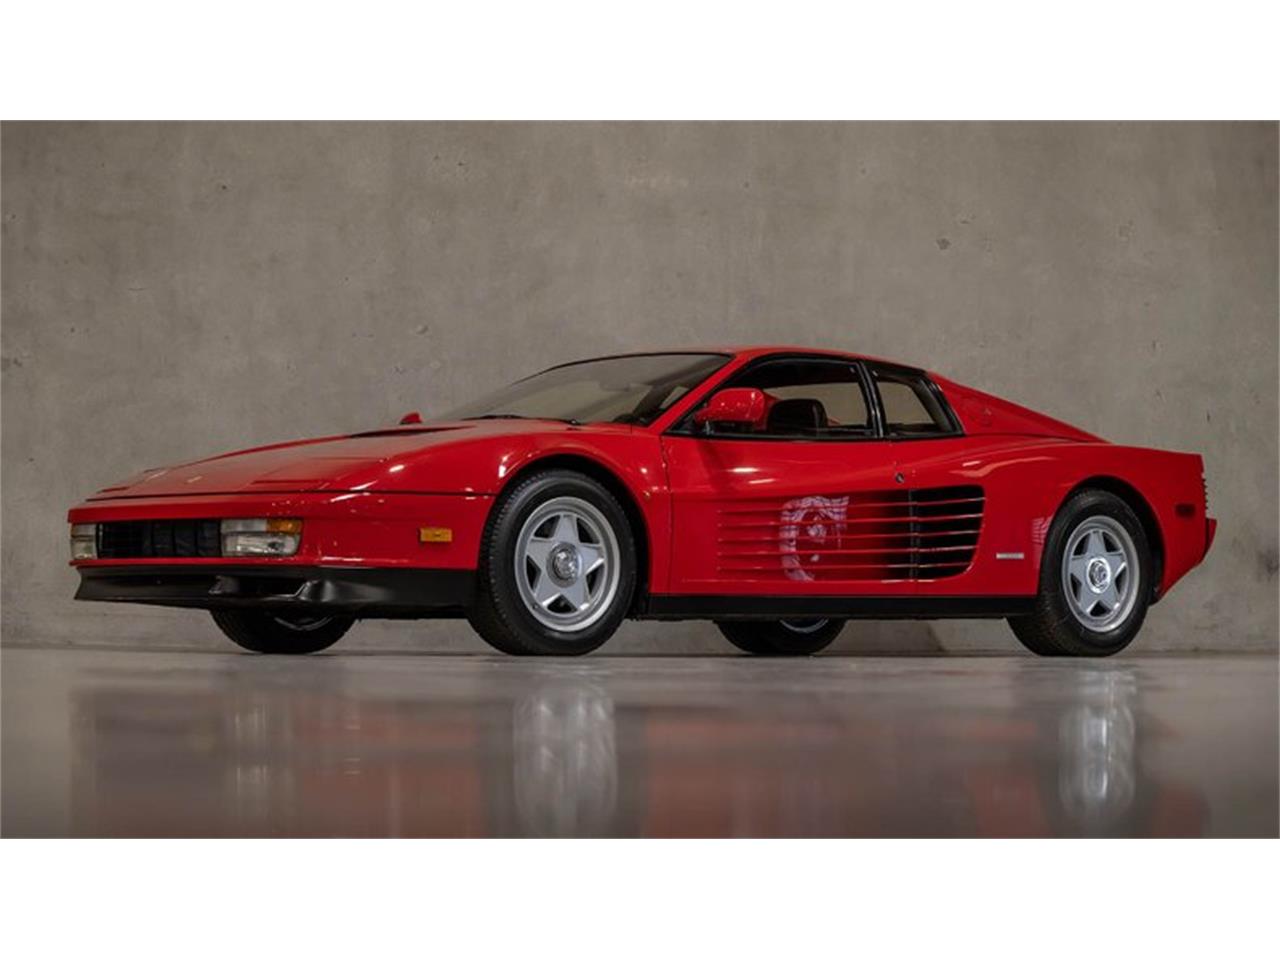 For Sale at Auction: 1986 Ferrari Testarossa in Monterey, California for sale in Monterey, CA